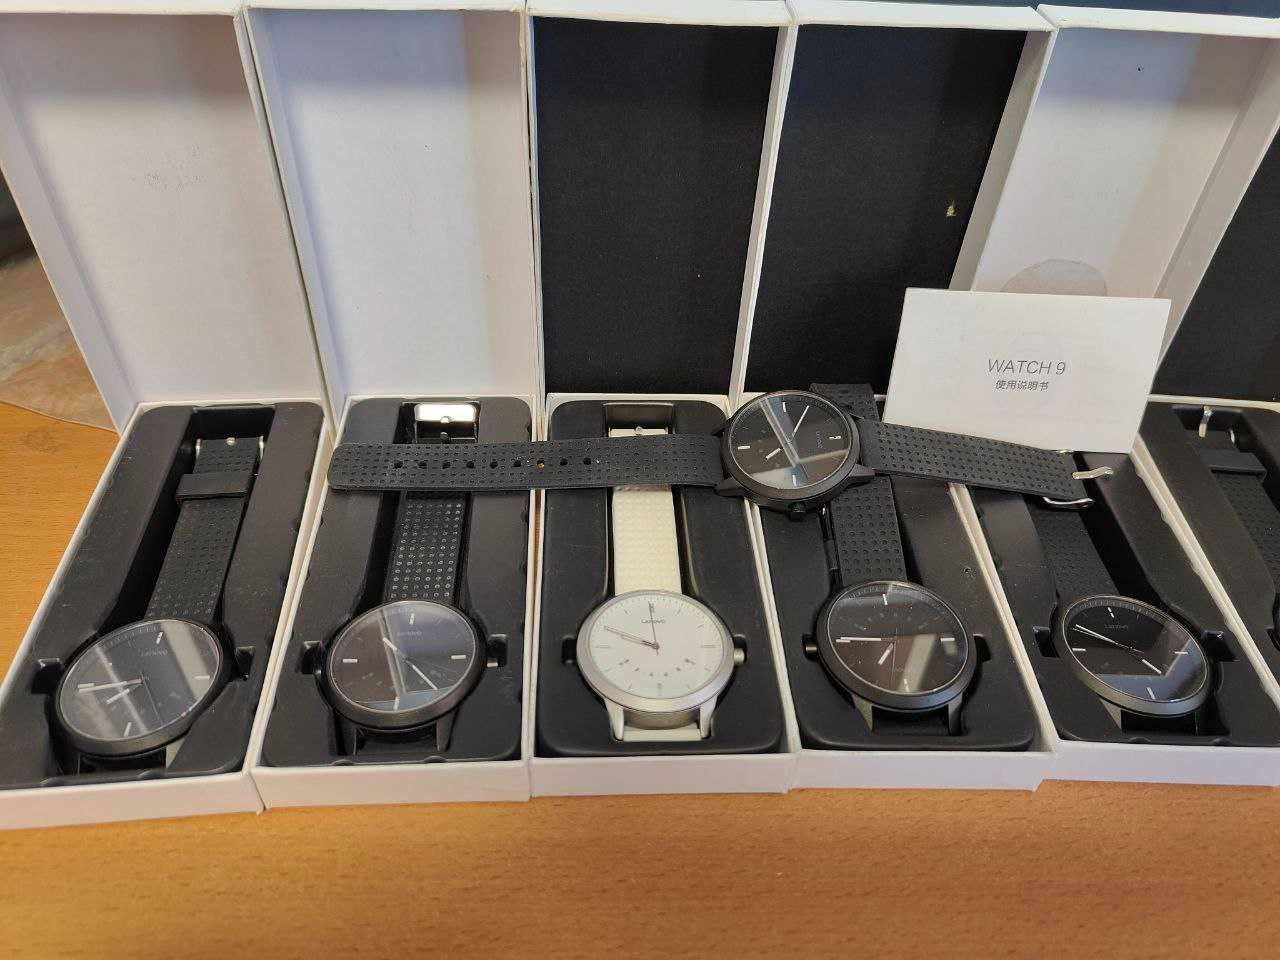 Гібридний Smart-годинник Lenovo Watch 9 Одним лотом за 7 штук